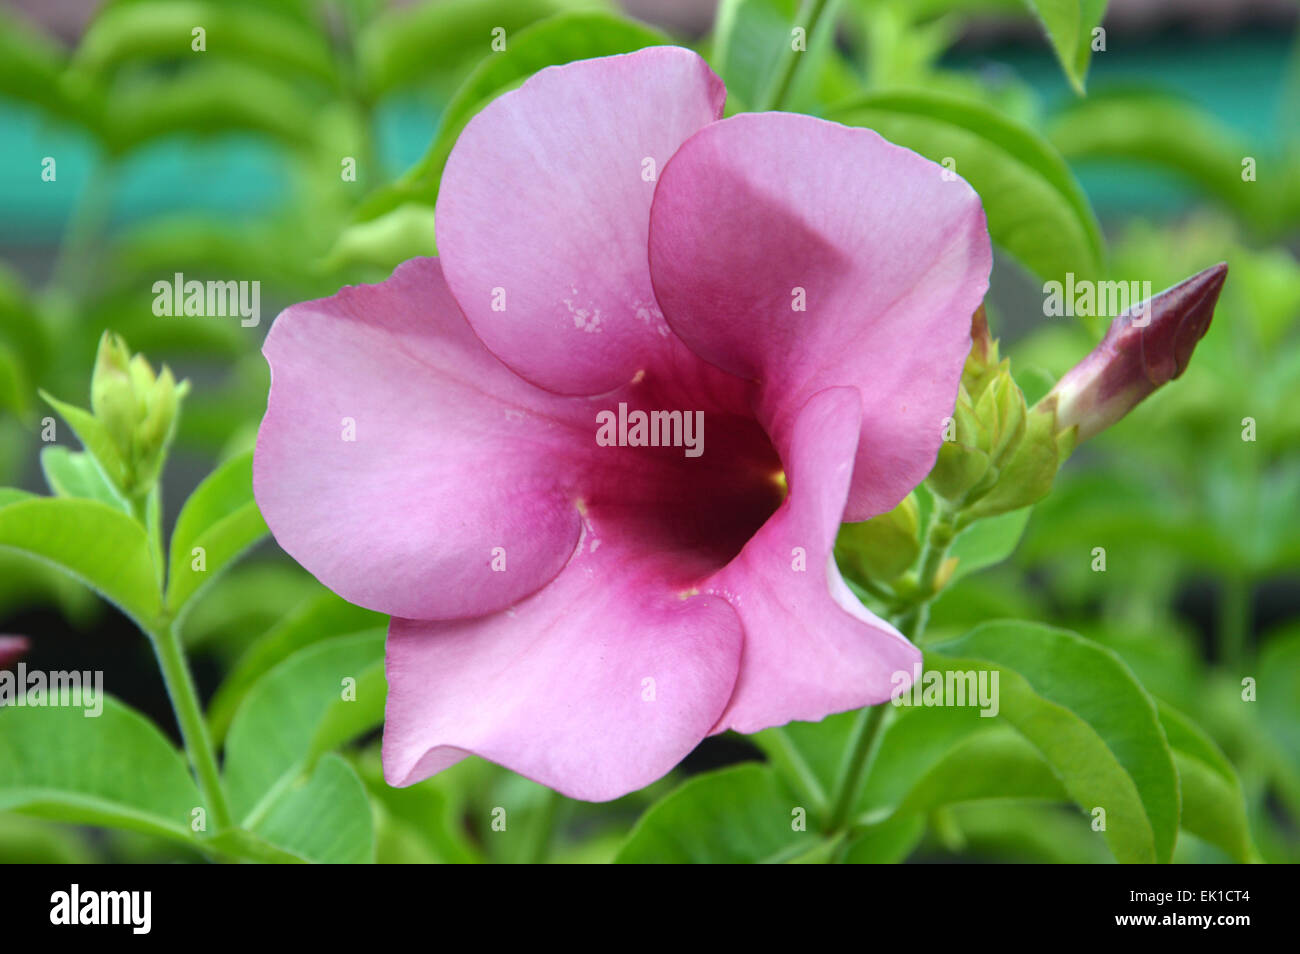 Purple Begonia flower in the garden Stock Photo - Alamy